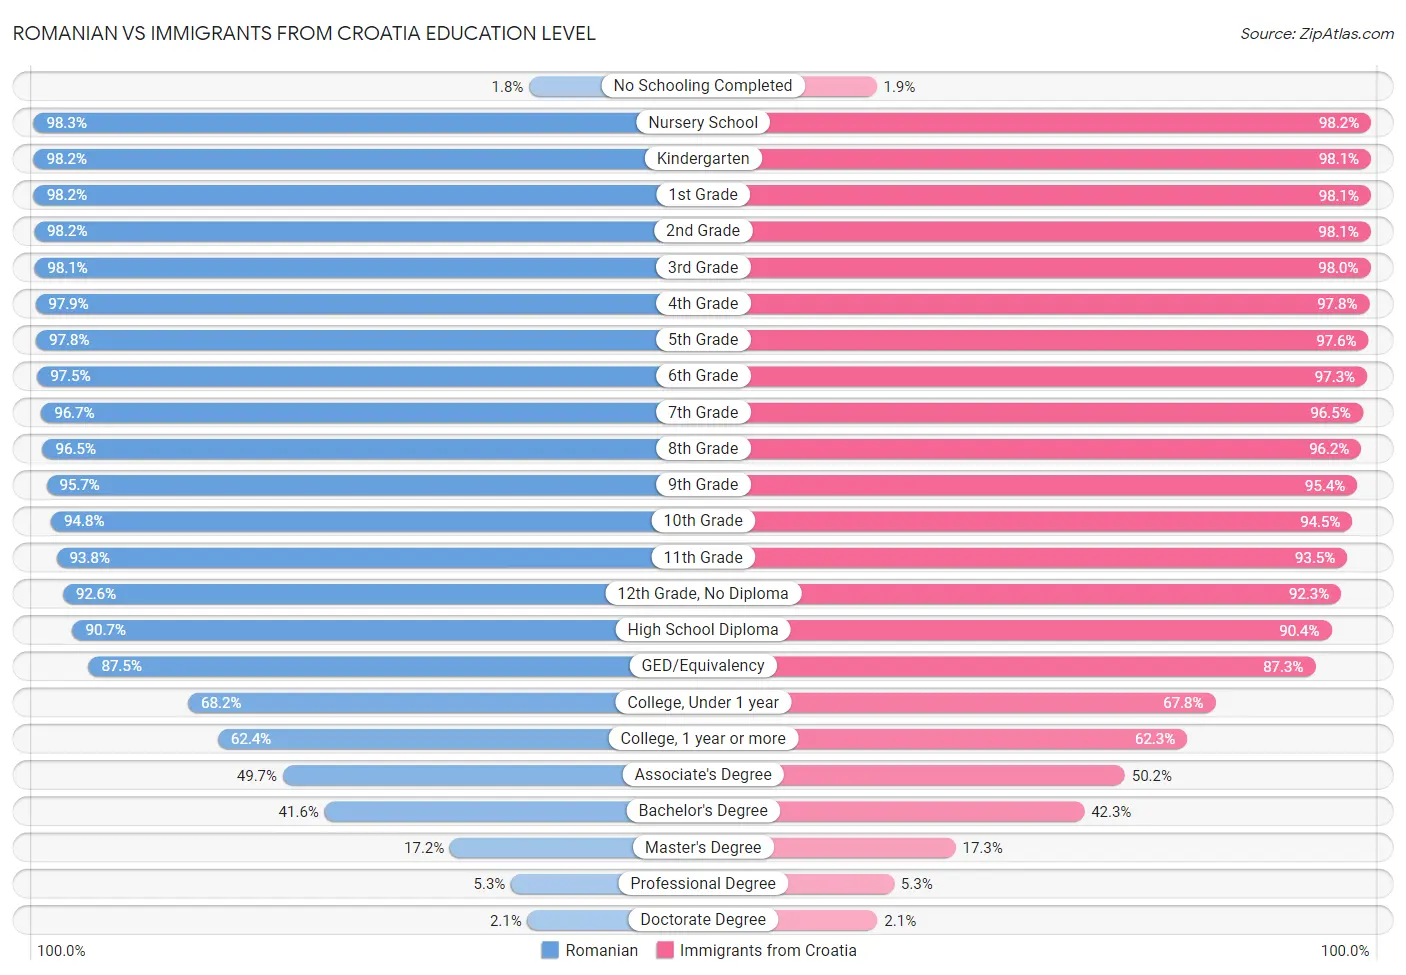 Romanian vs Immigrants from Croatia Education Level